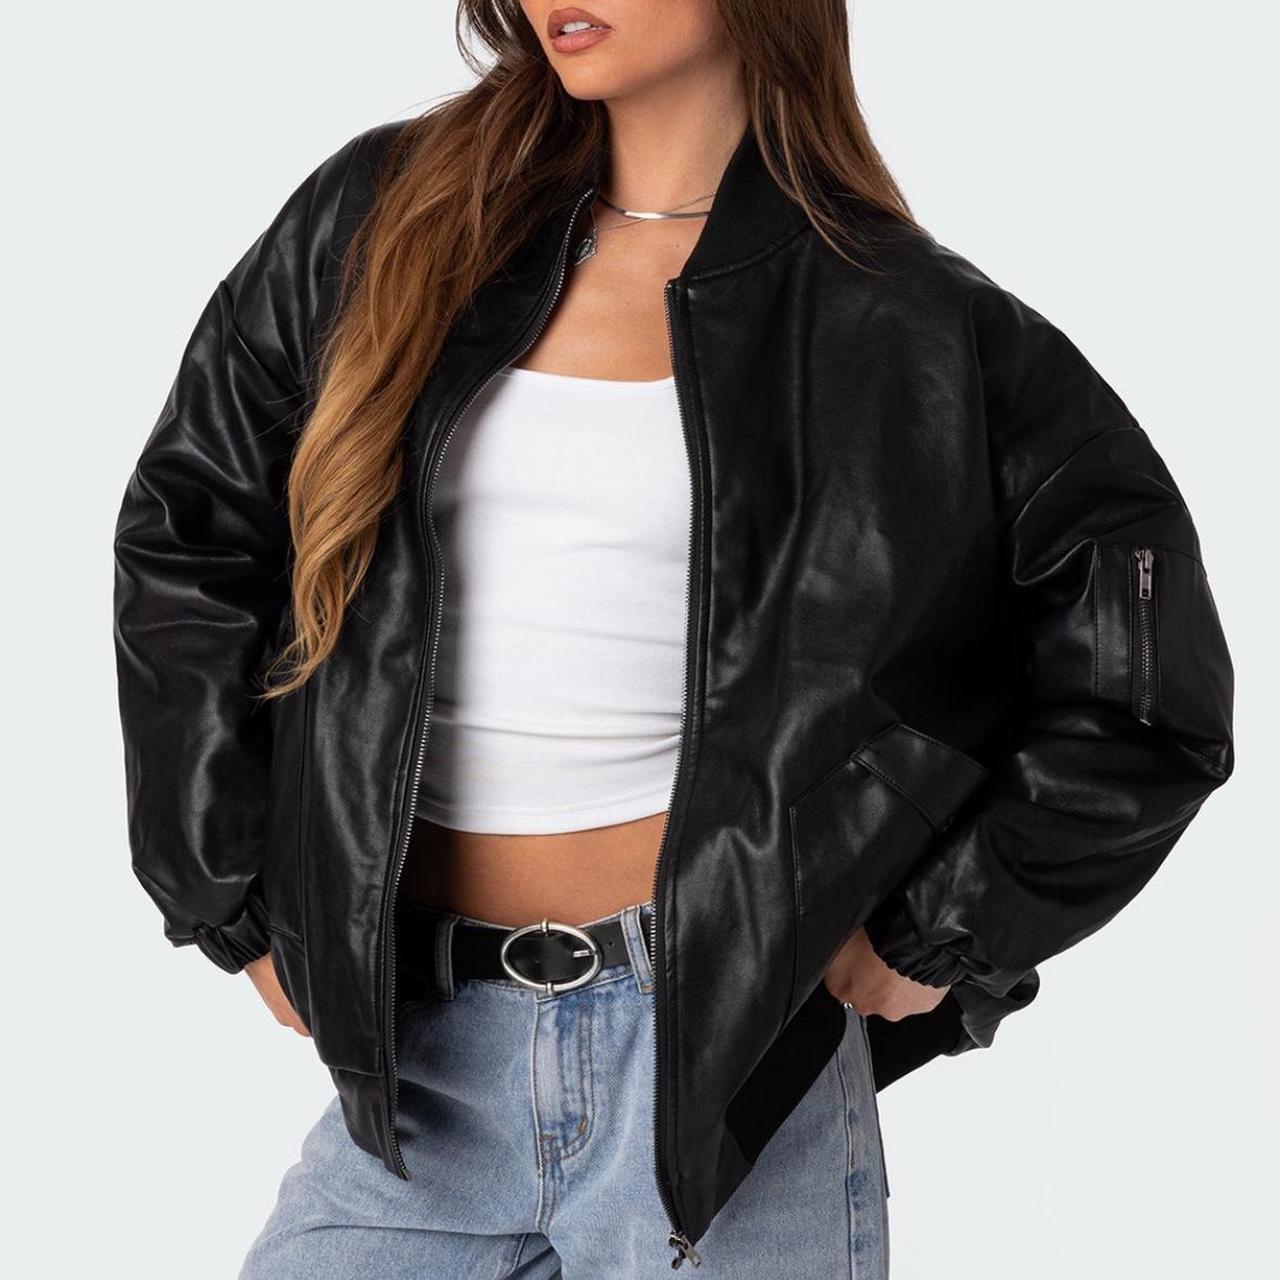 Edikted Faux leather oversized bomber jacket Super... - Depop